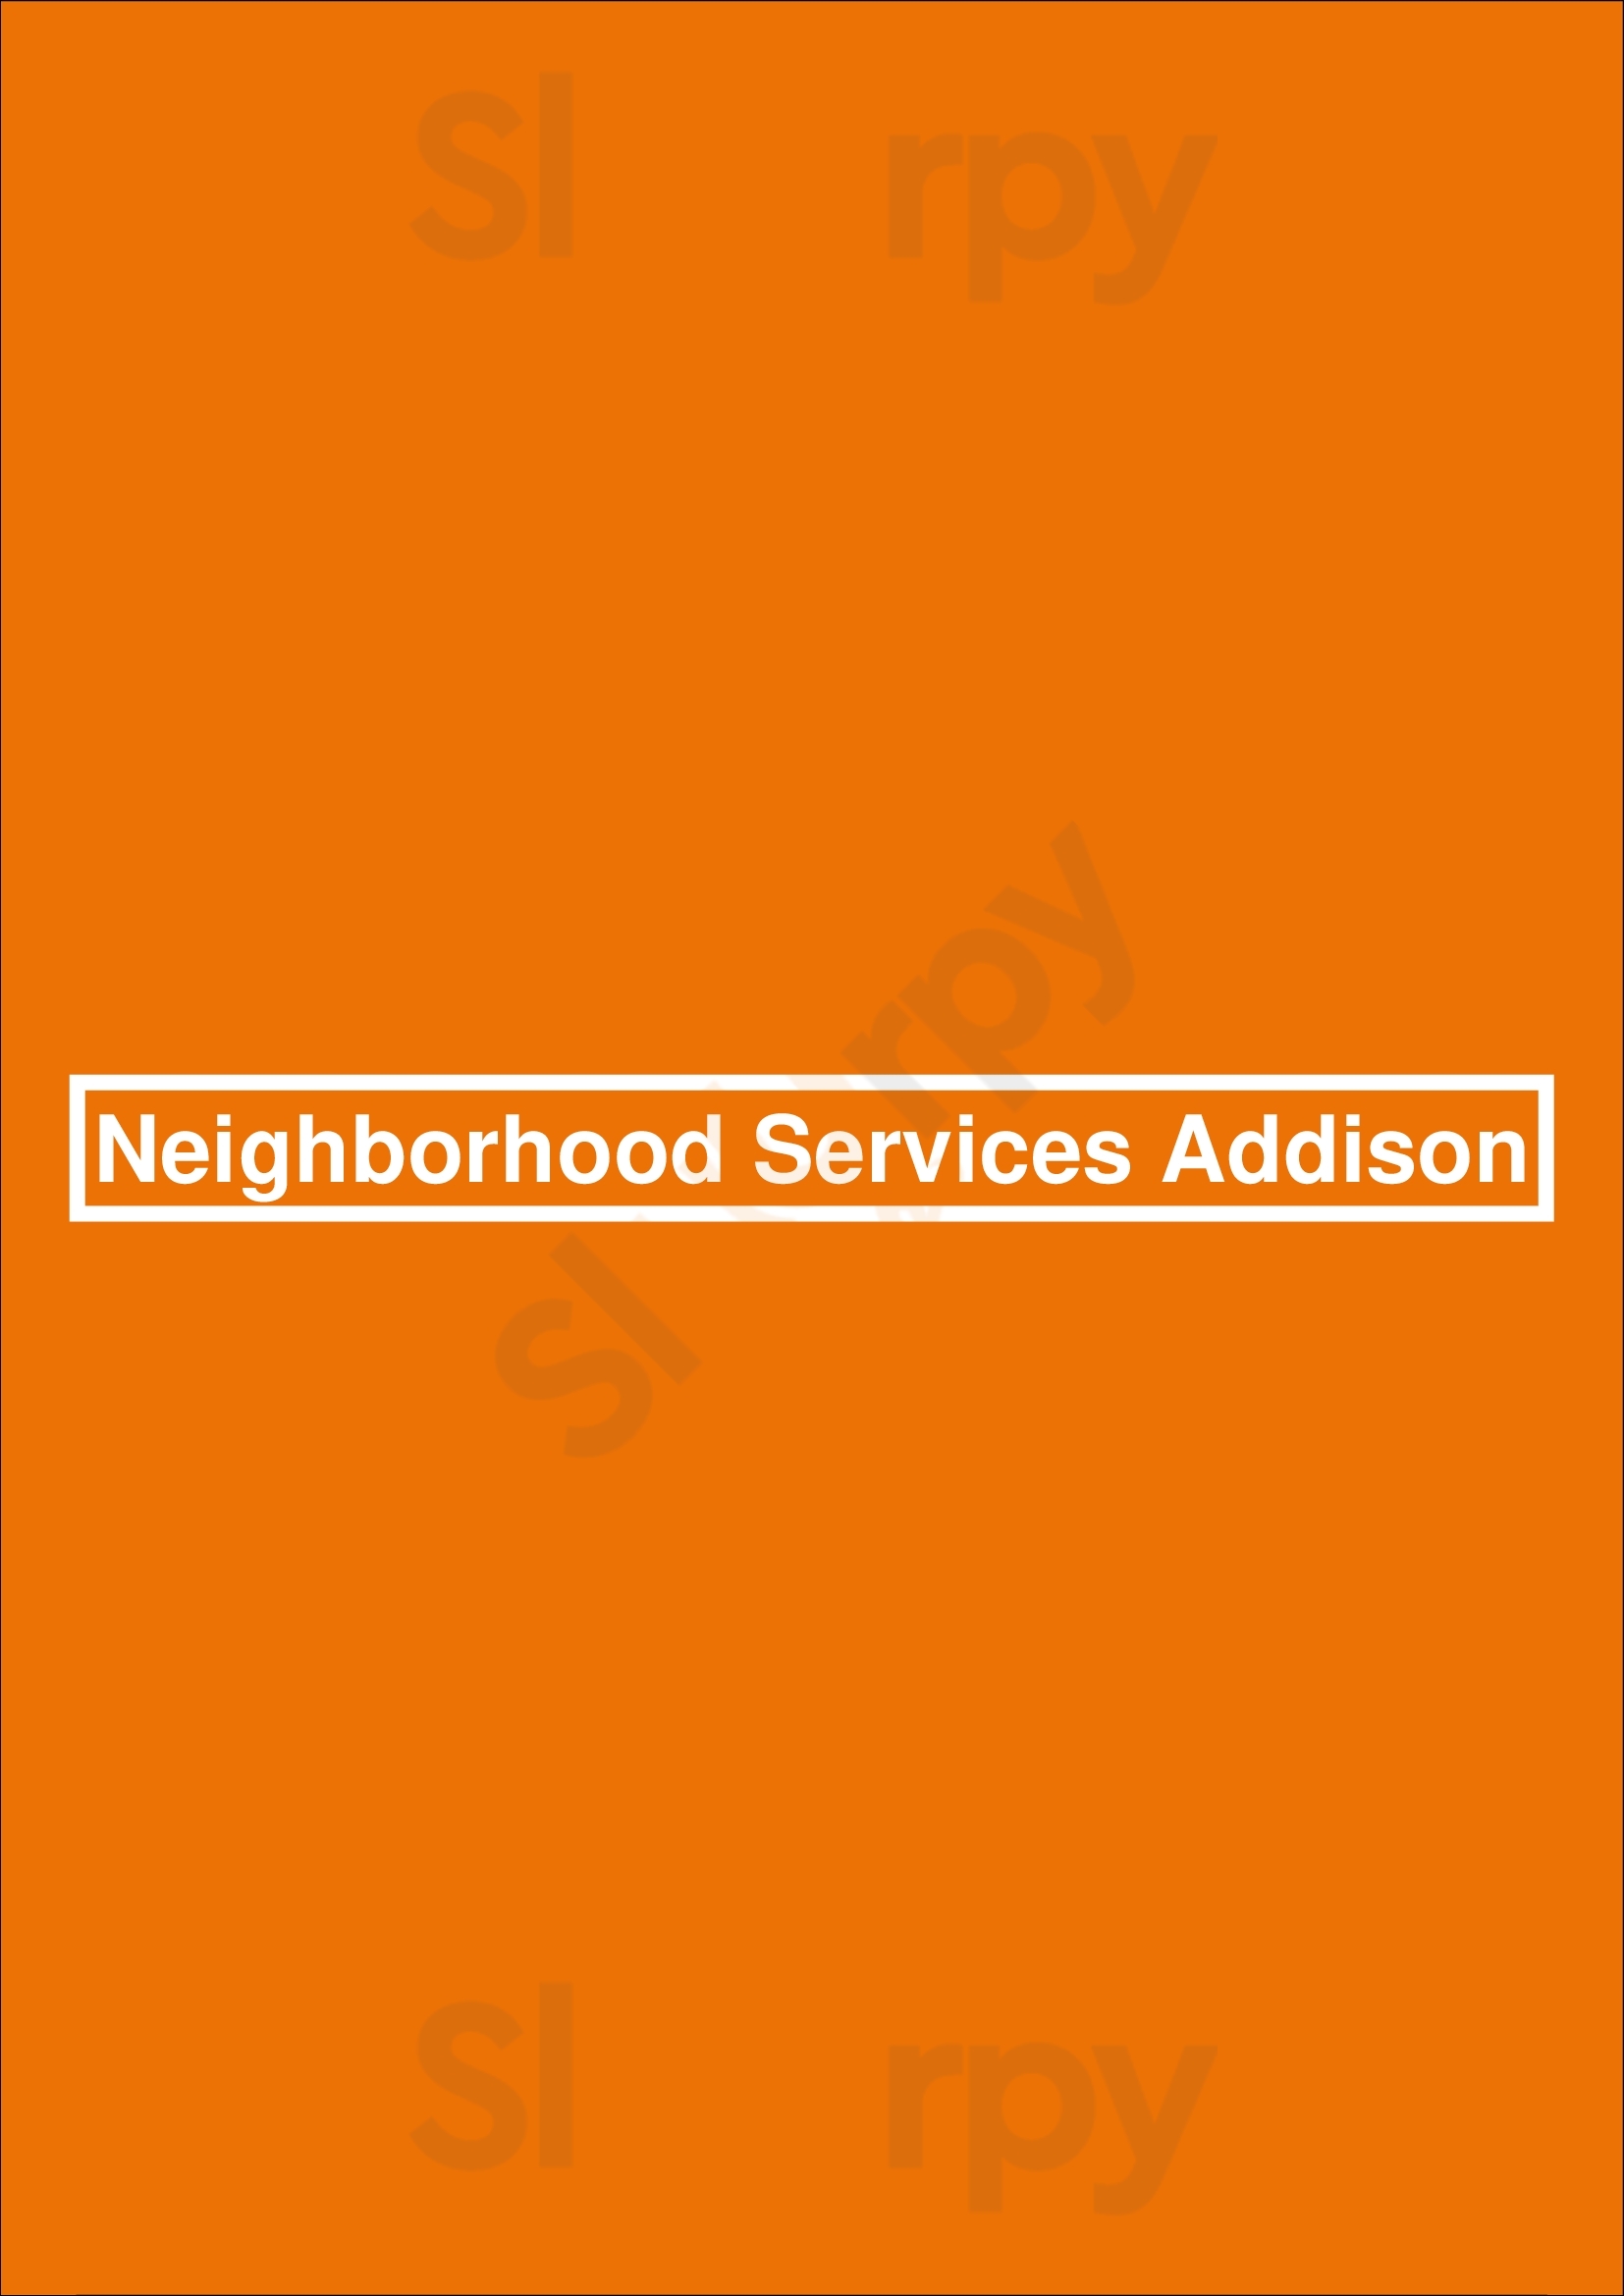 Neighborhood Services Addison Dallas Menu - 1